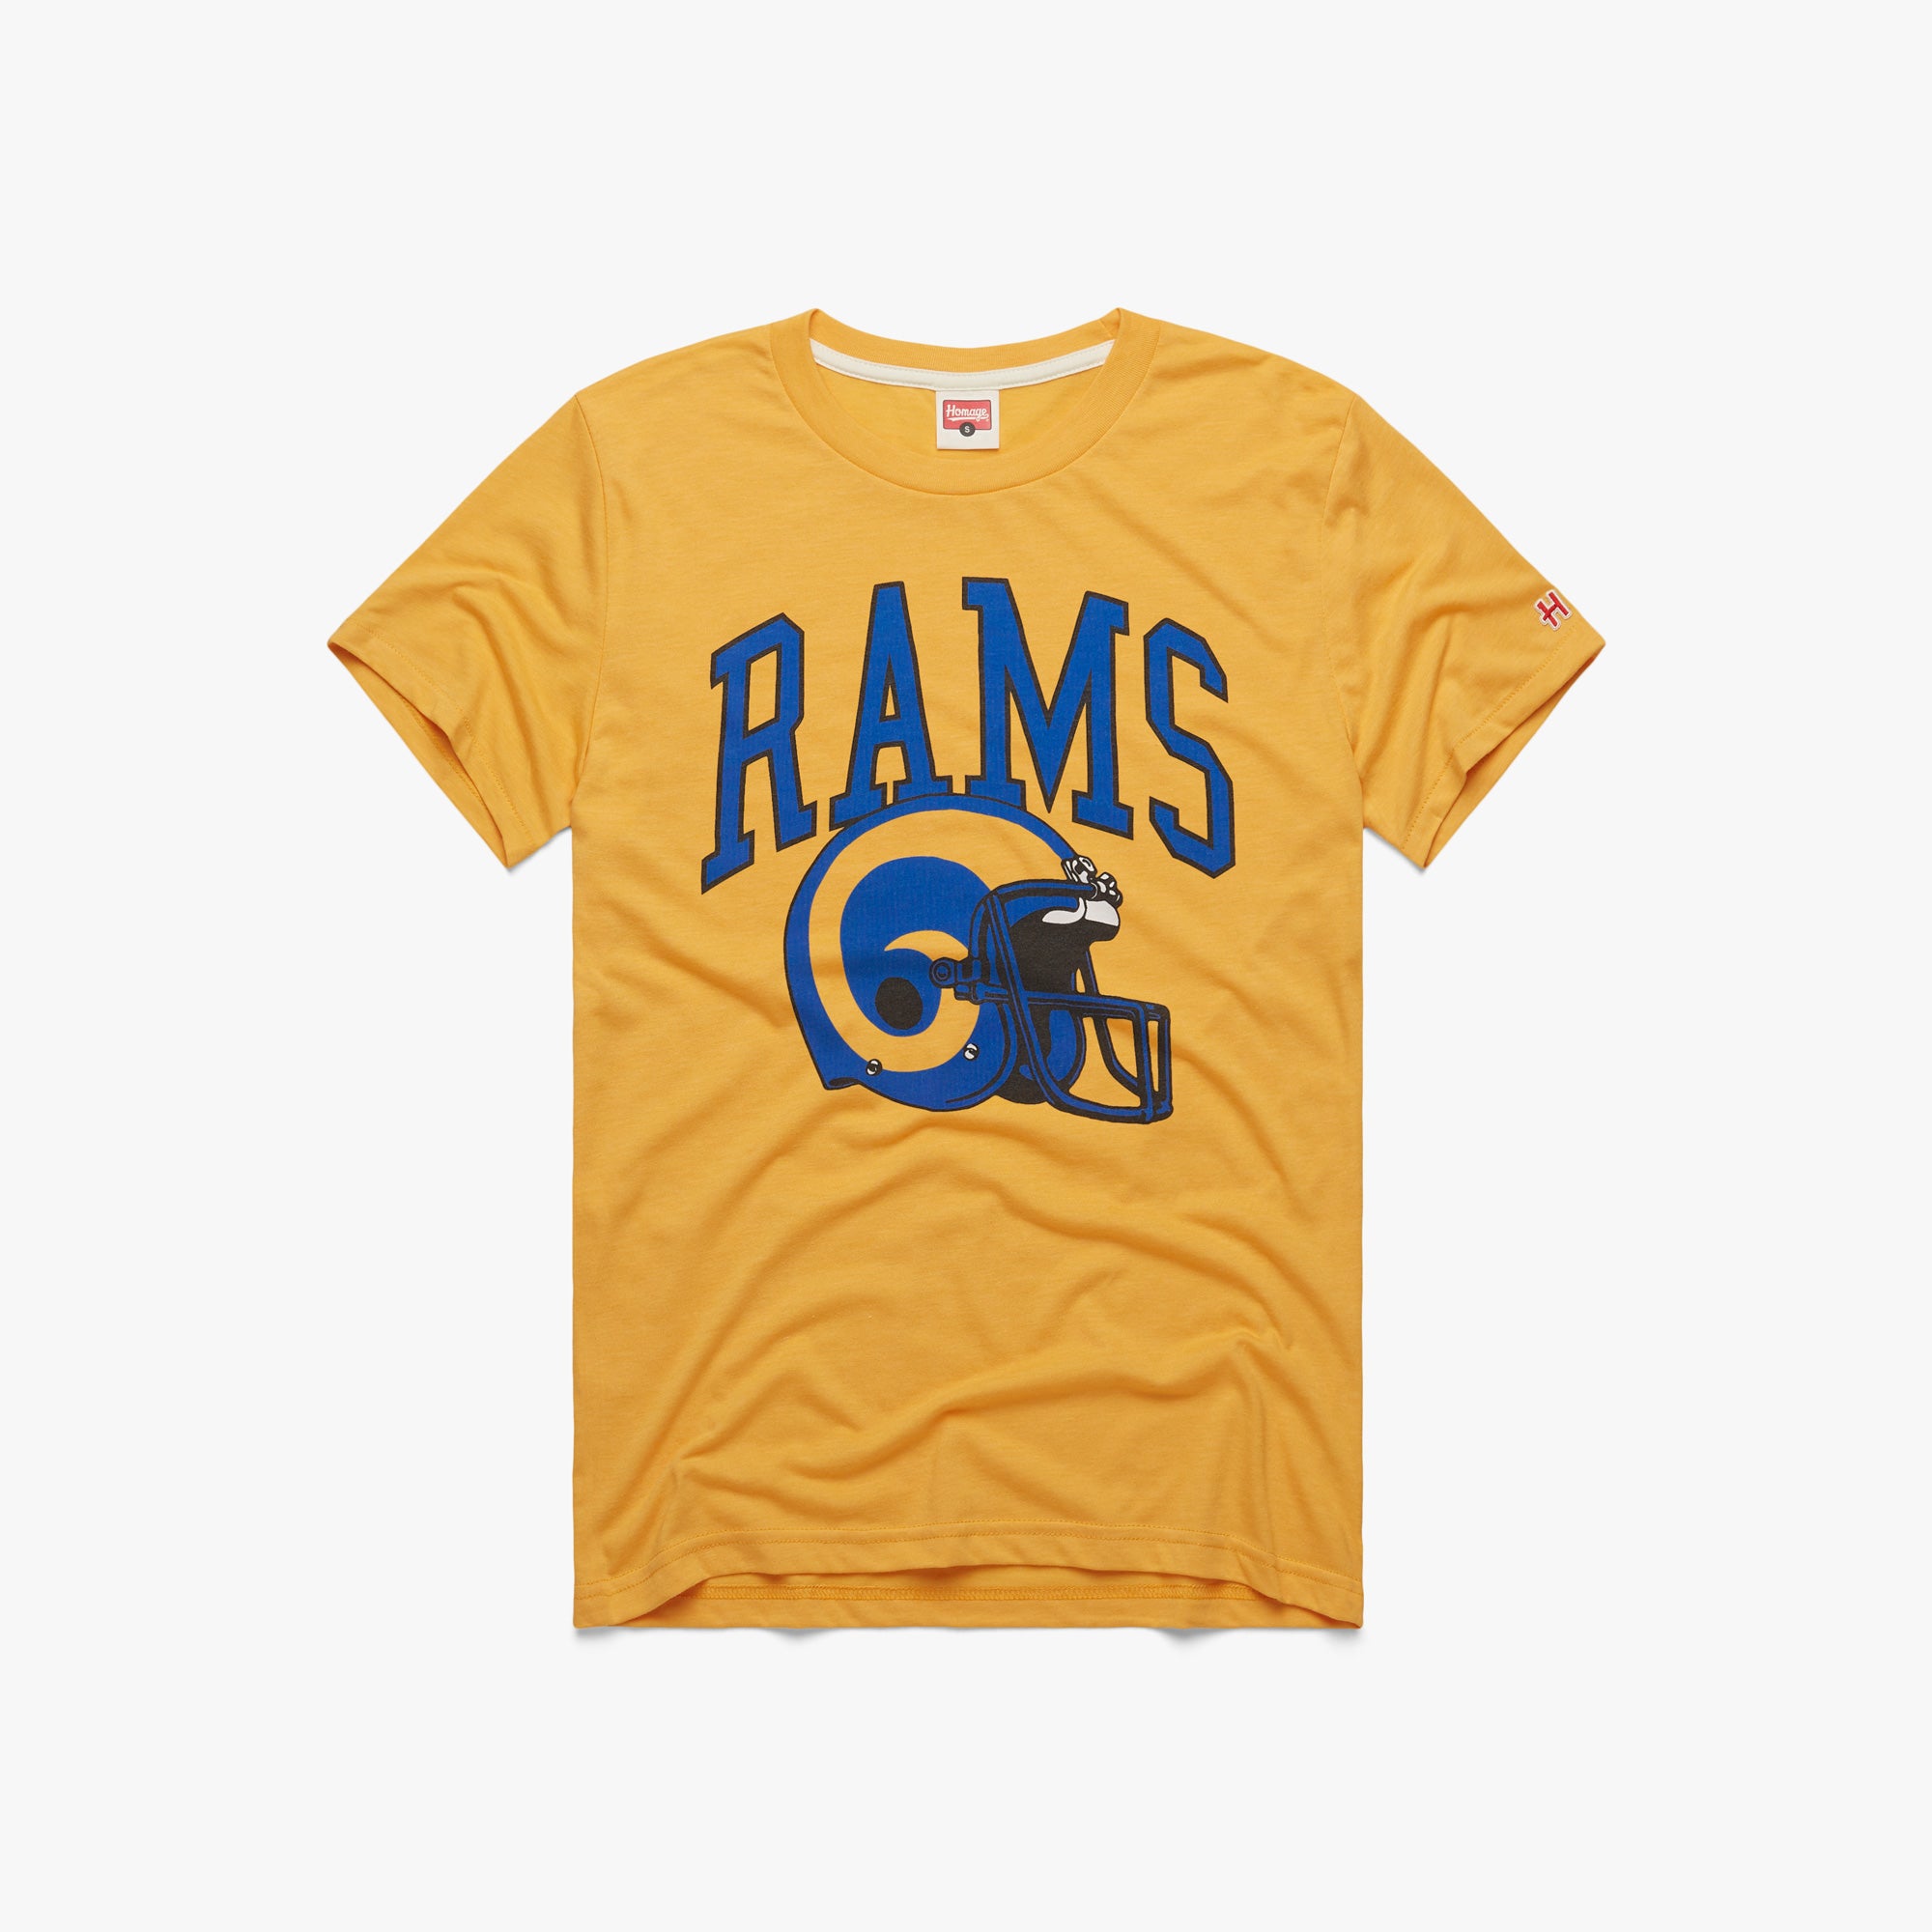 where can i buy a rams shirt